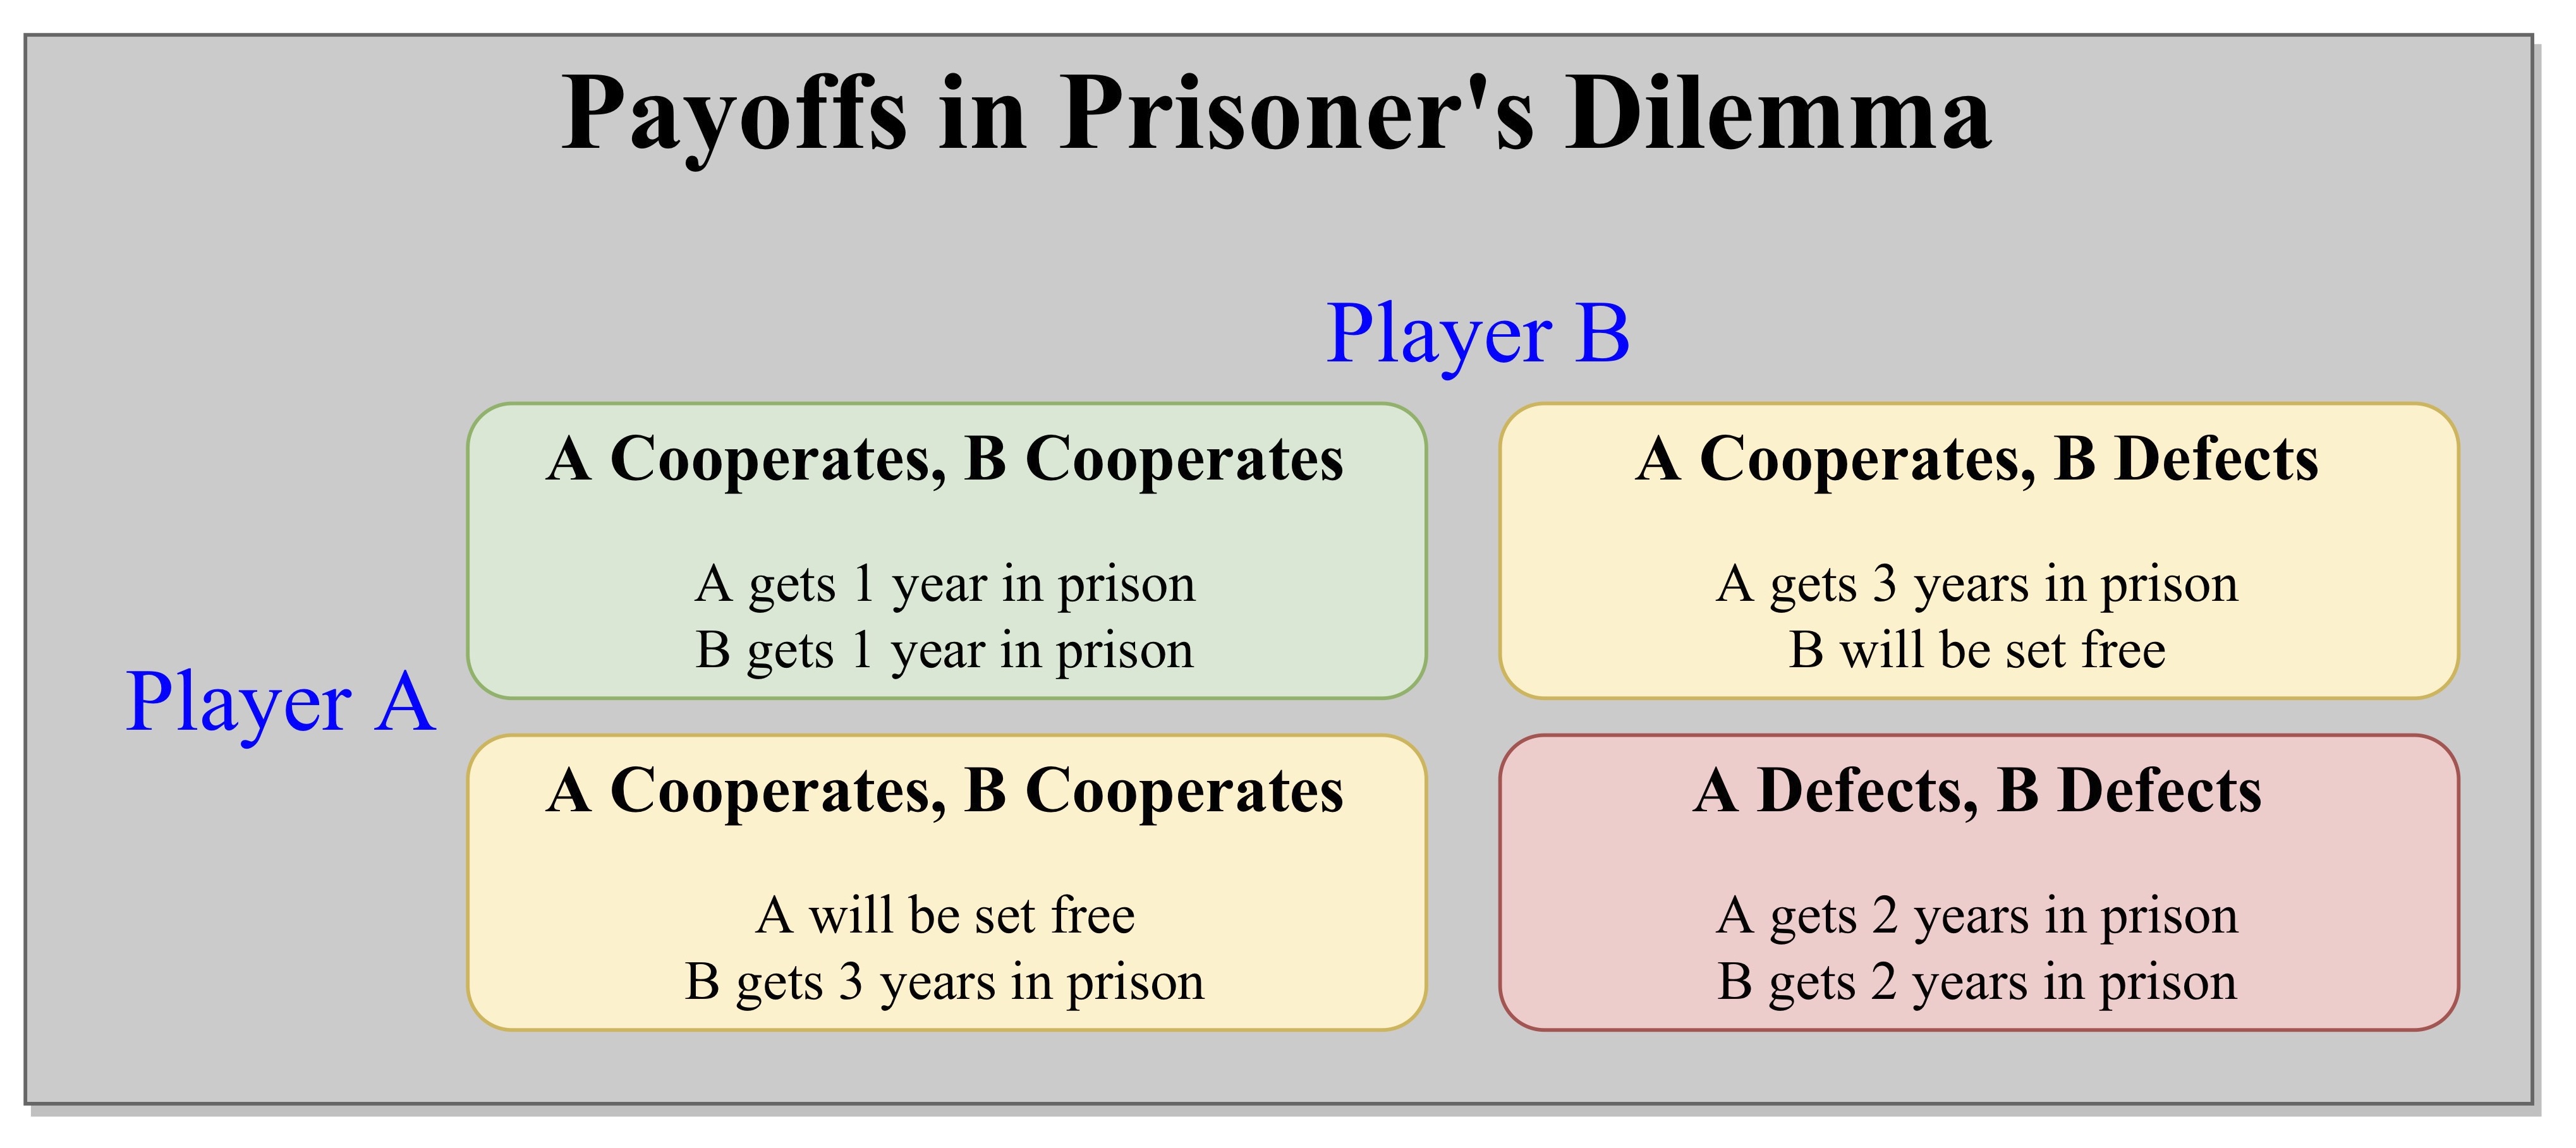 Prisoner's Dilemma payoff scores